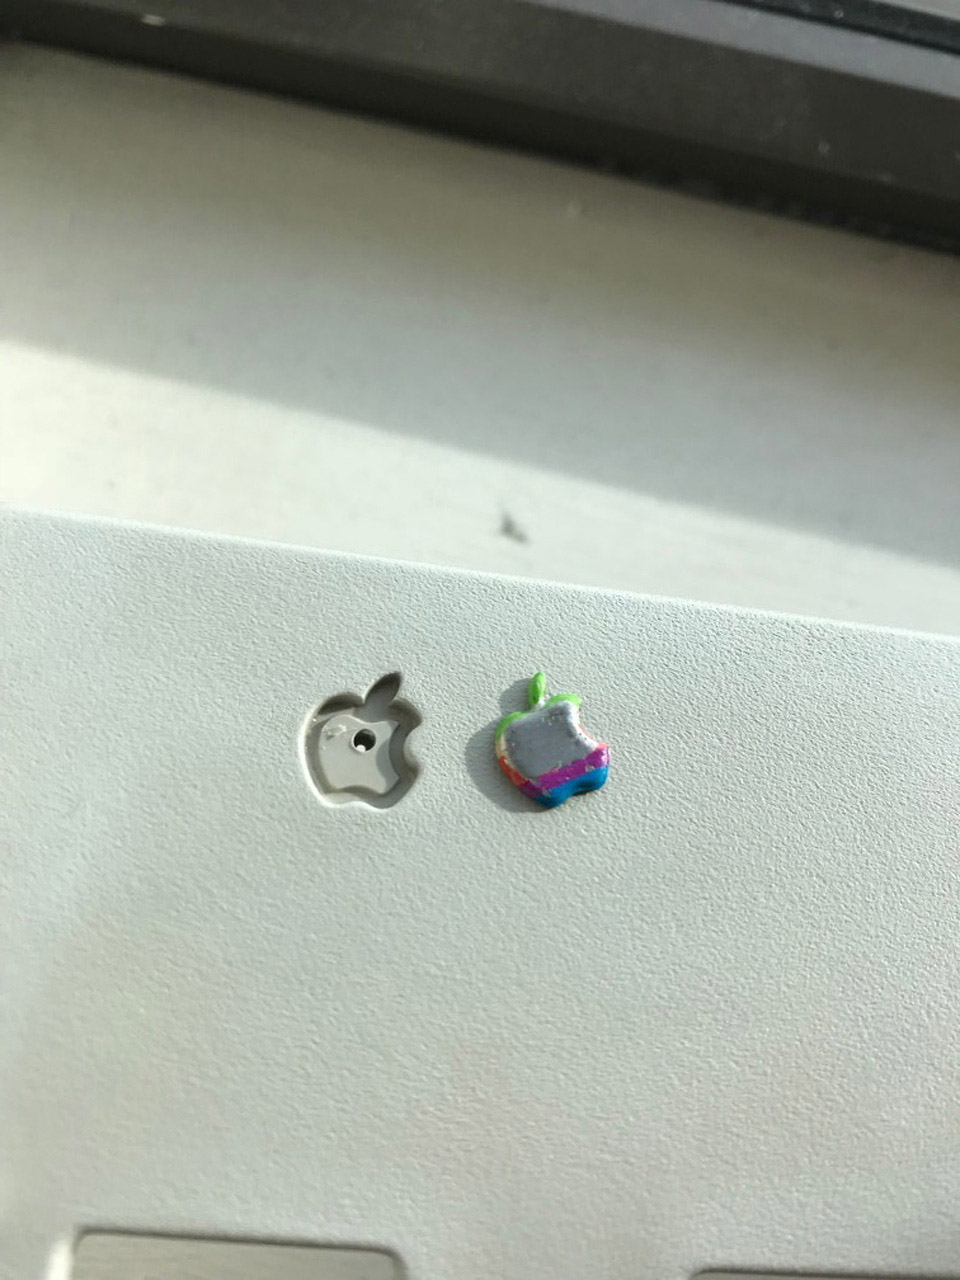 Ruined Apple Emblem